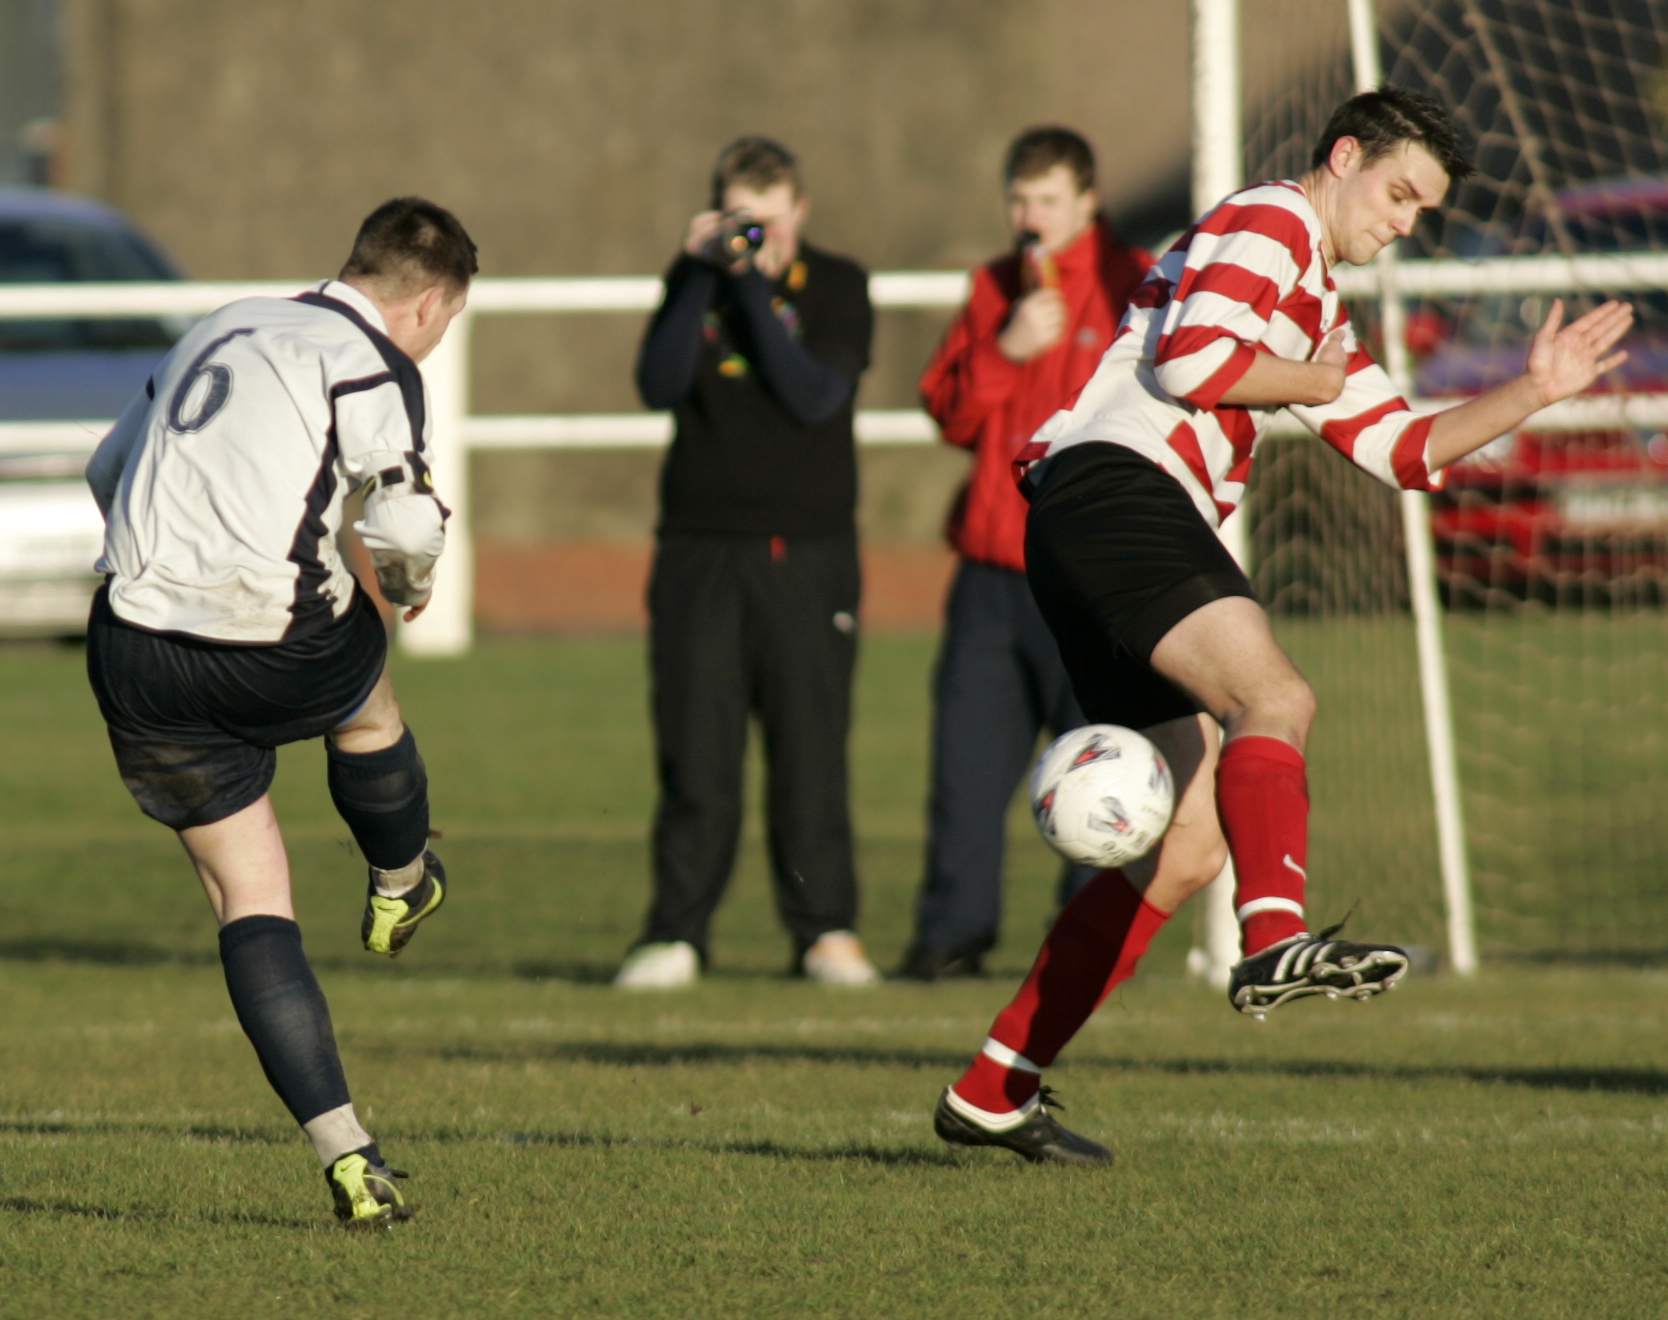 two soccer players kicking a soccer ball toward a goal